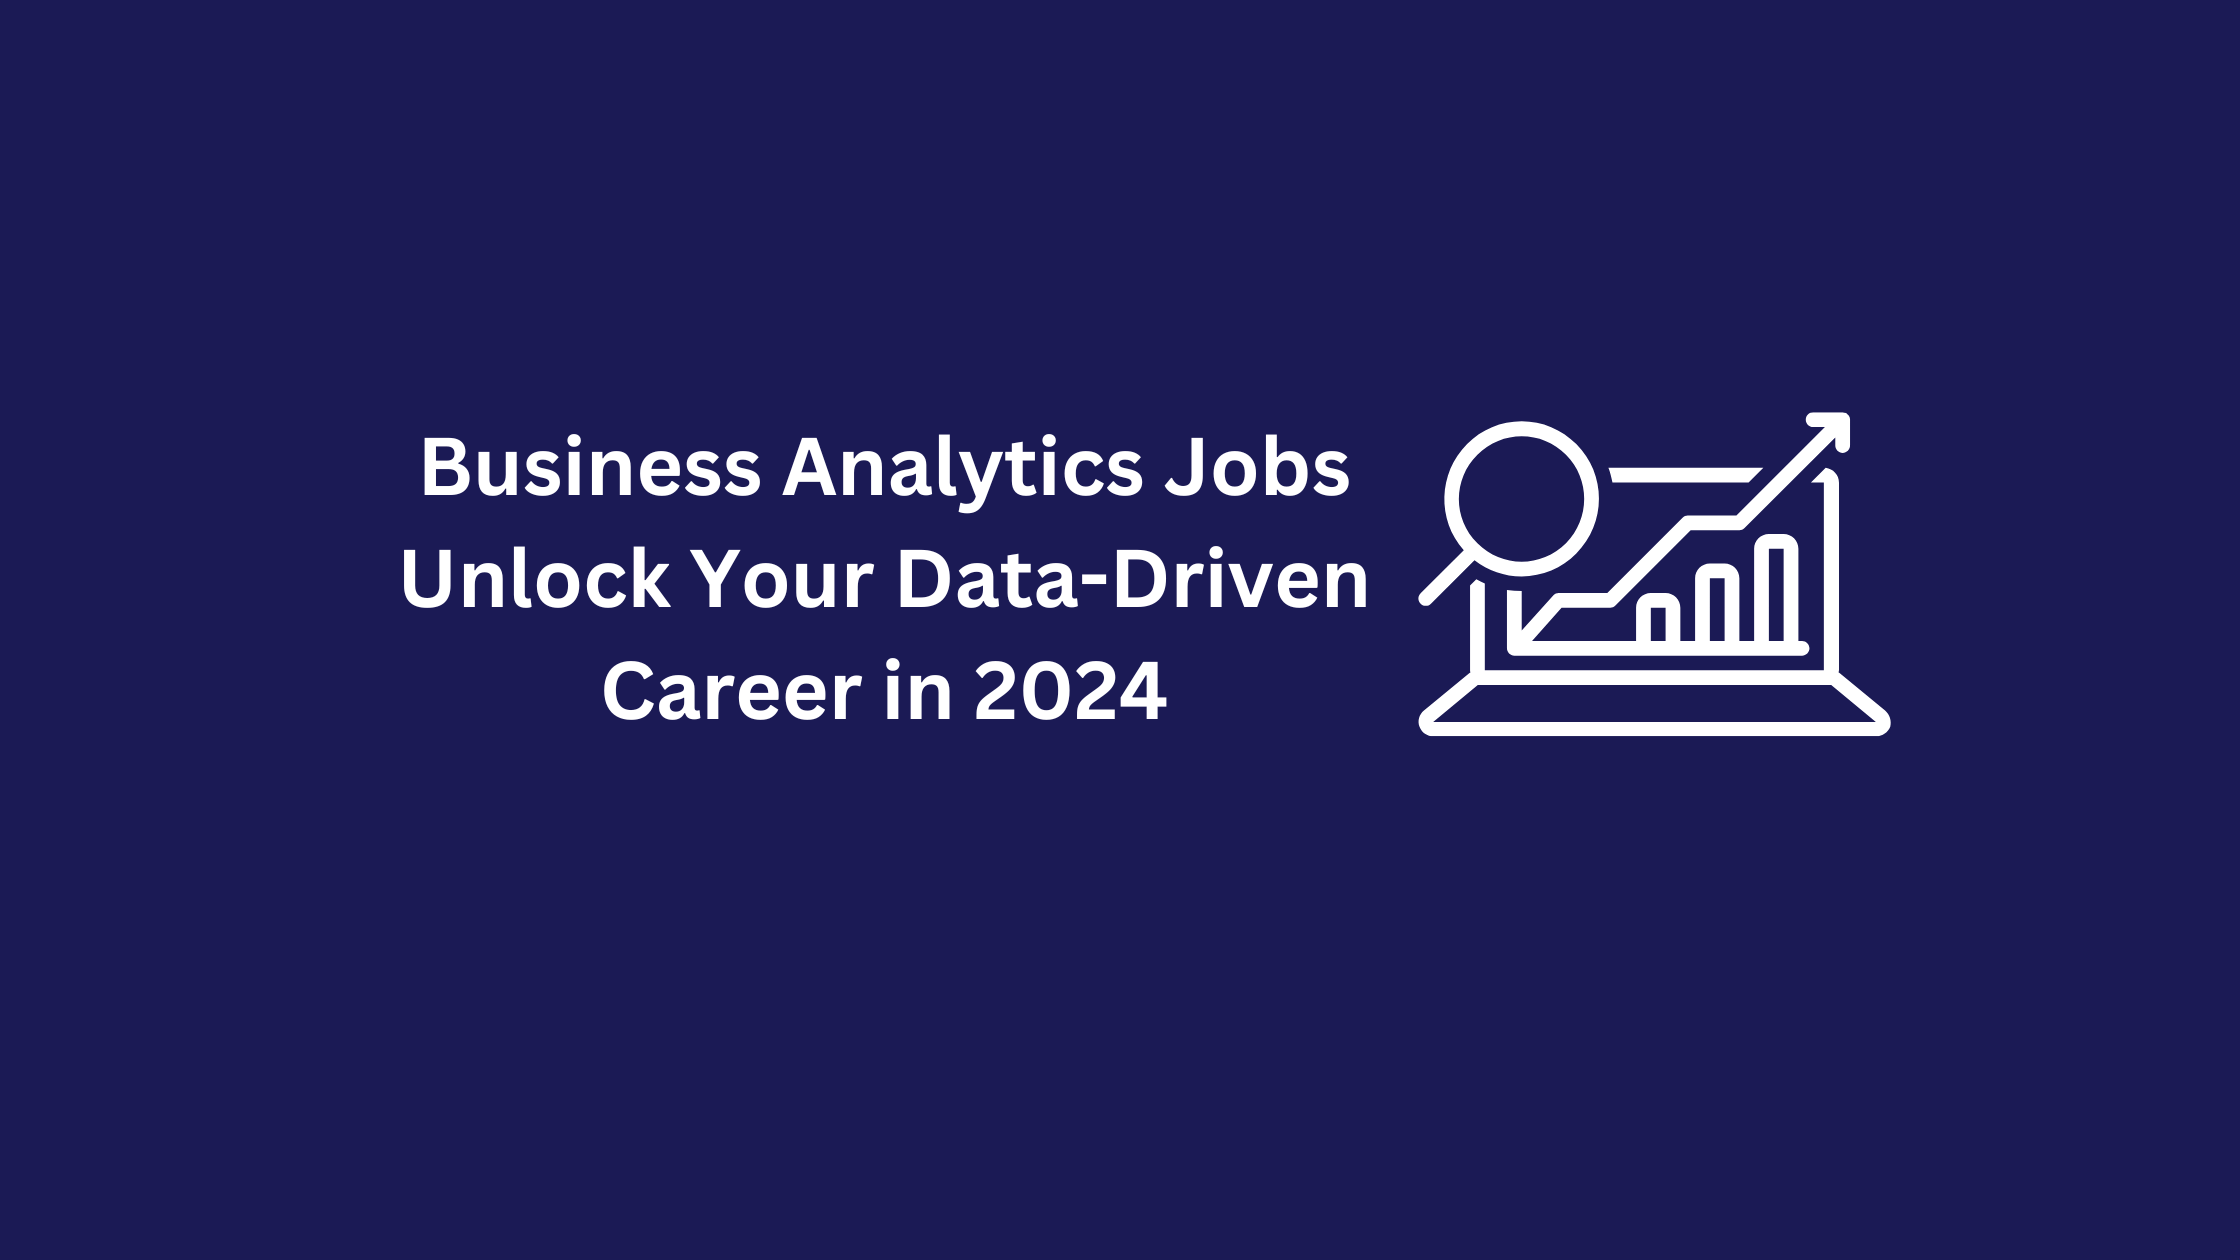 Business Analytics Jobs: Unlock Your Data-Driven Career in 2024